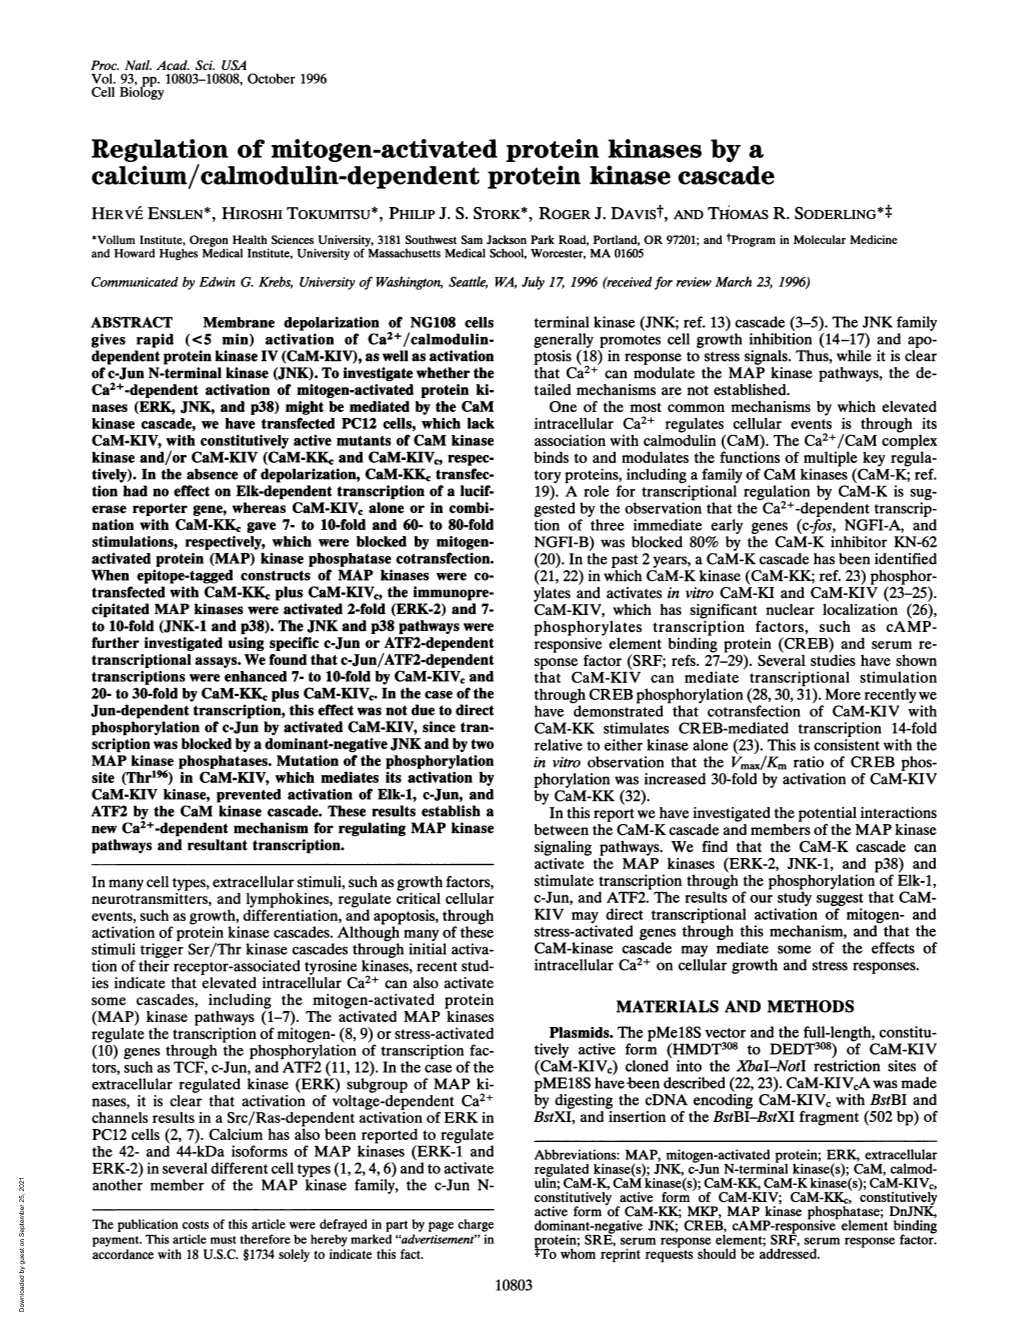 Regulation of Mitogen-Activated Protein Kinases by a Calcium/Calmodulin-Dependent Protein Kinase Cascade HERVEI ENSLEN*, HIROSHI TOKUMITSU*, PHILIP J